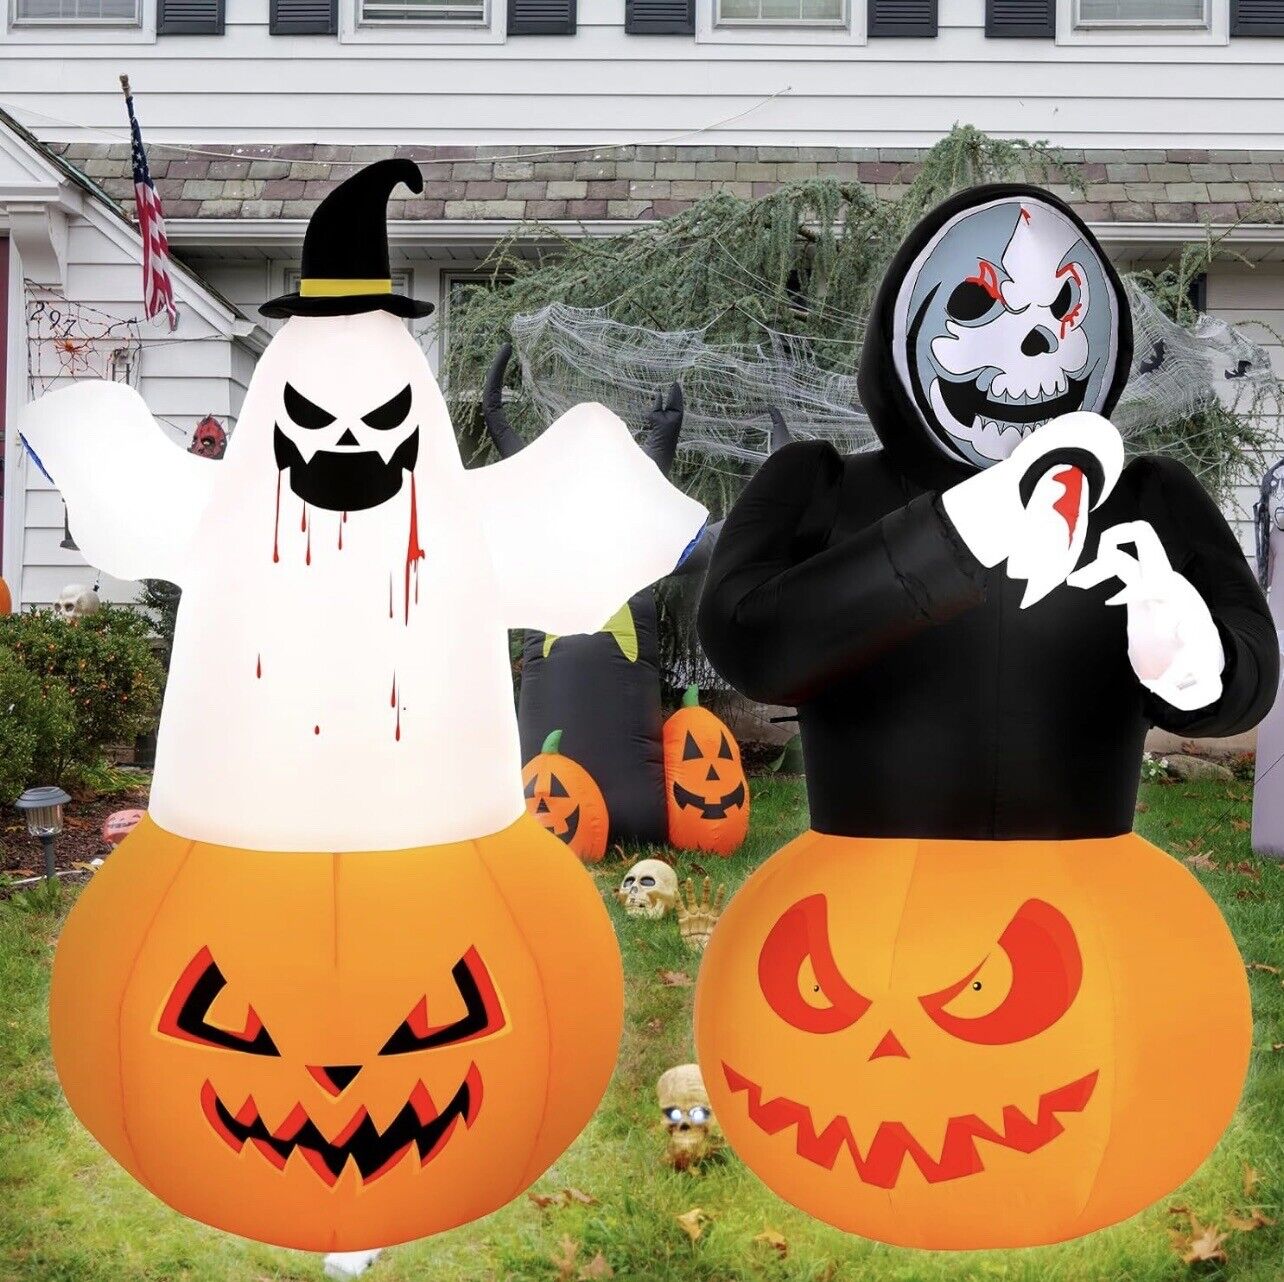 2 Pcs 5 FT Halloween Inflatables Decorations Ghost Pumpkin Skeleton Halloween